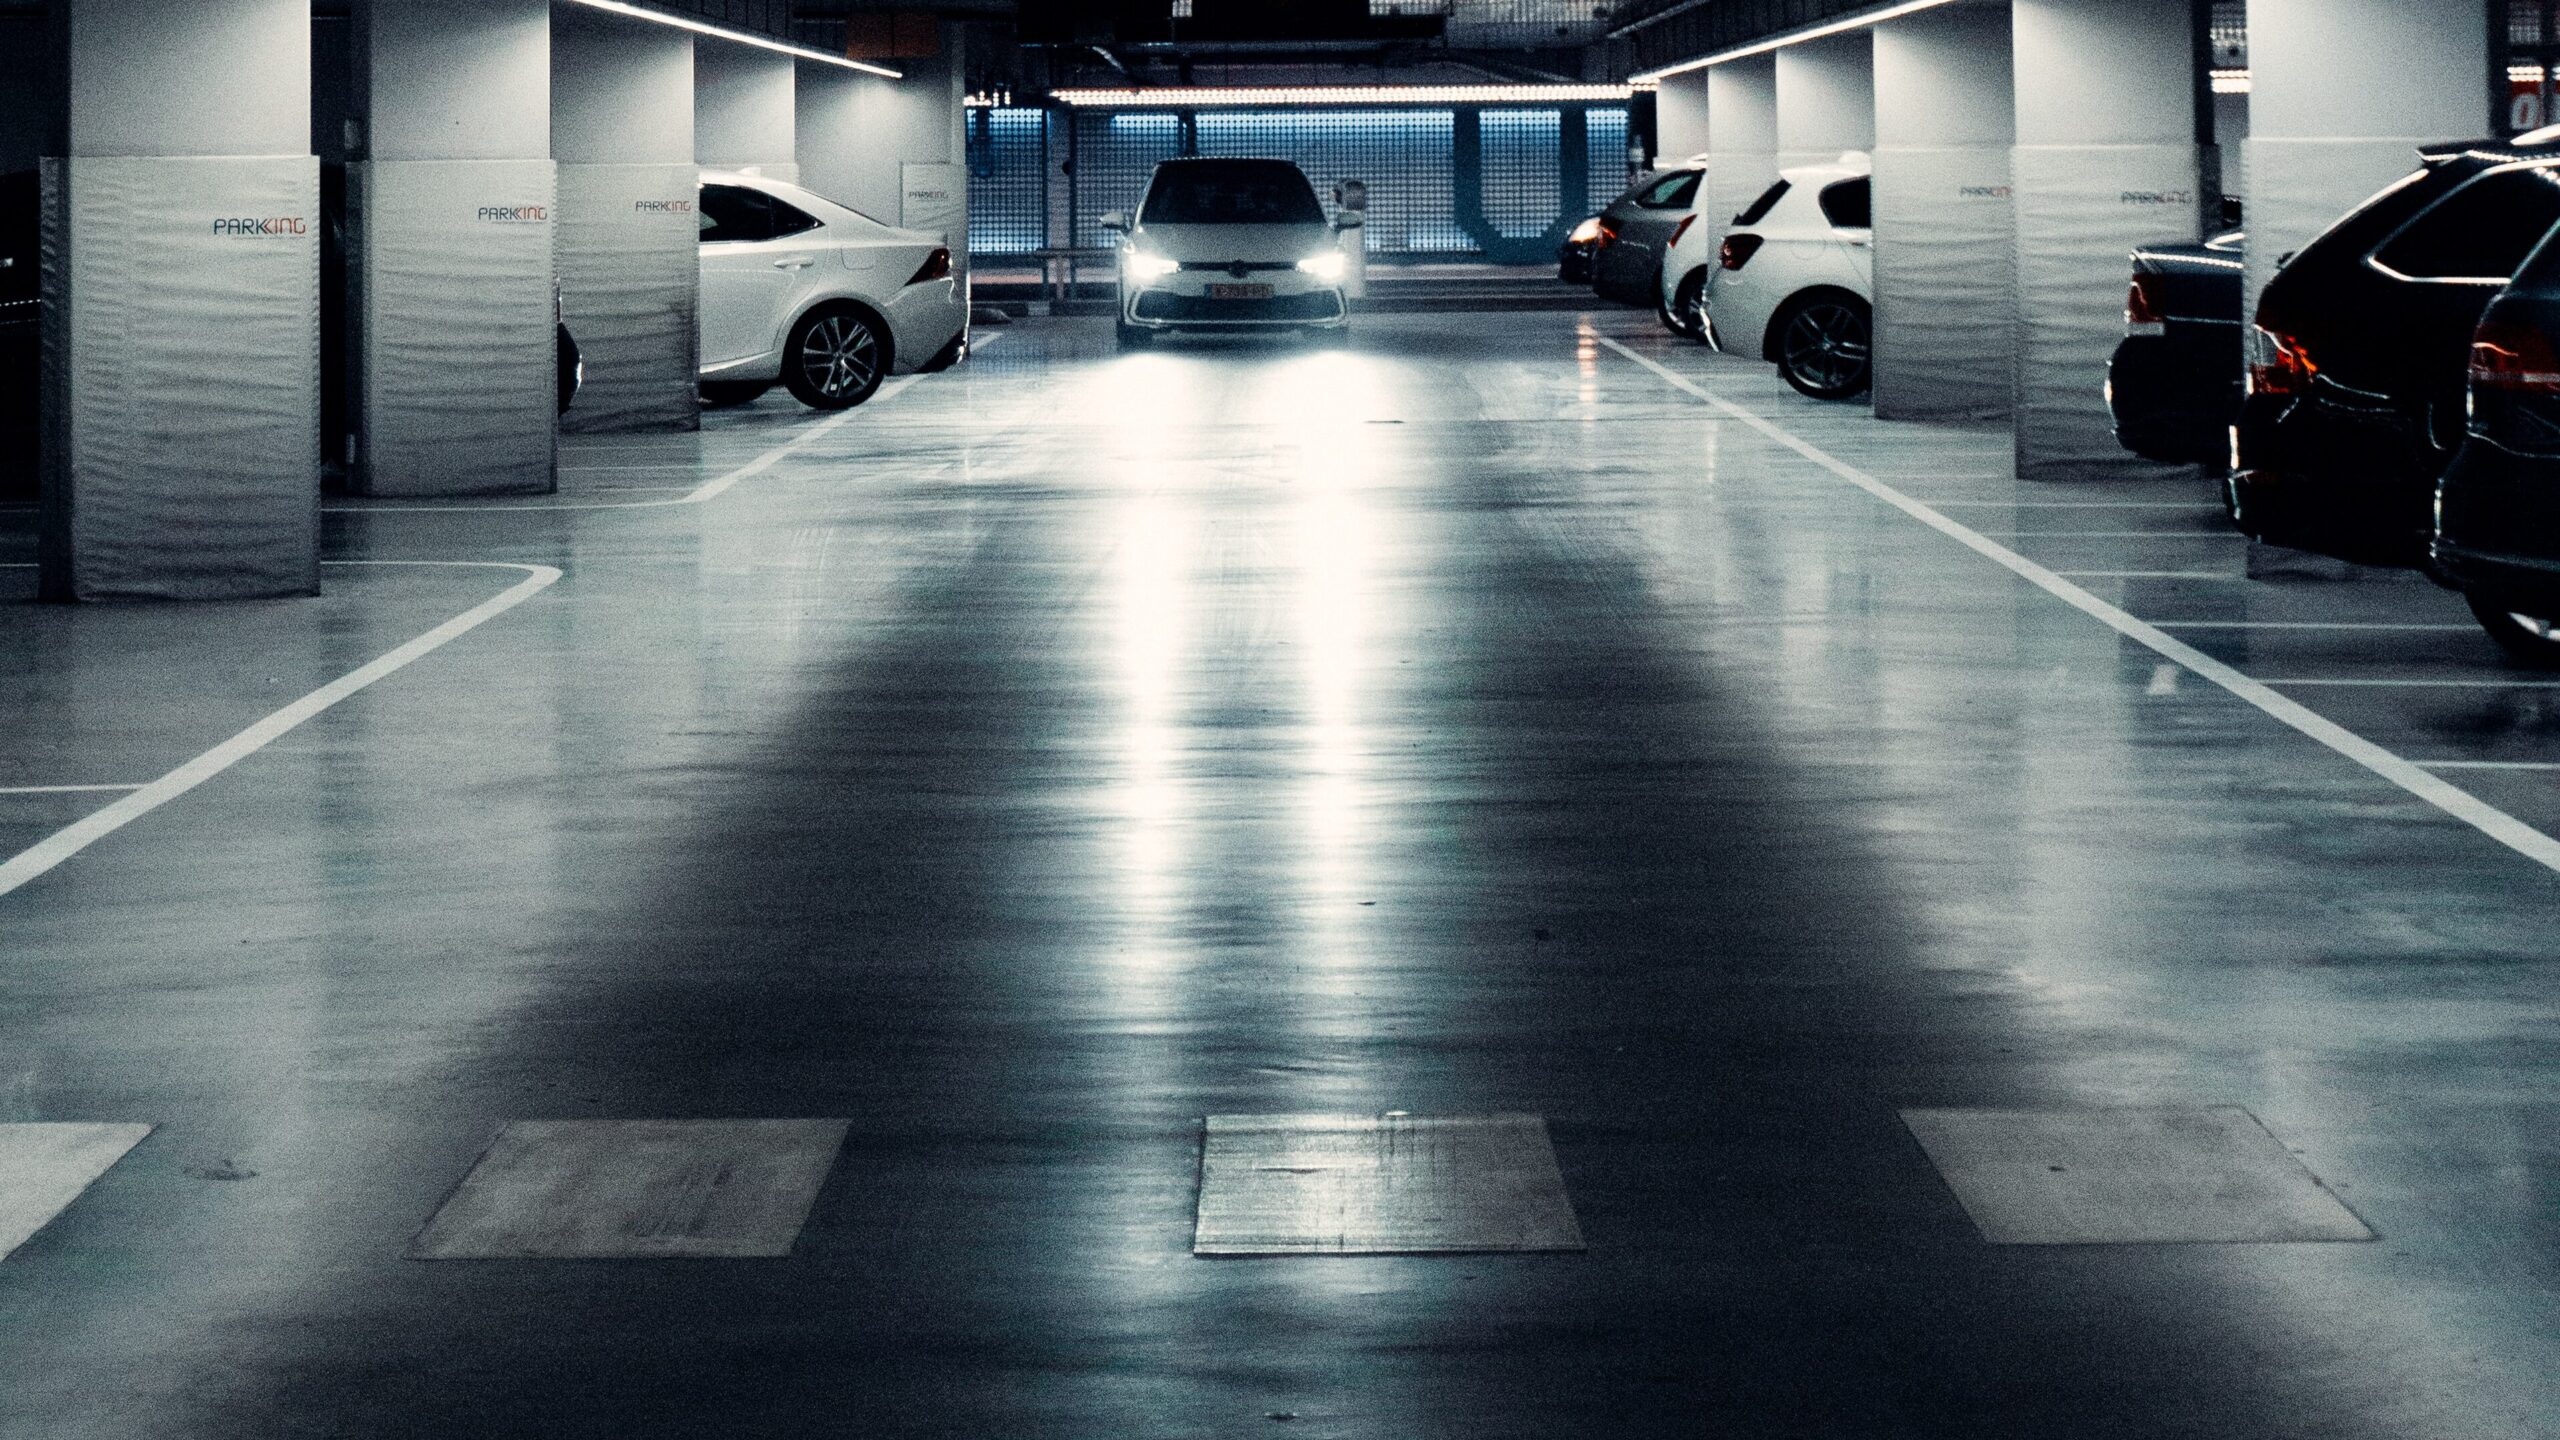 Photograph of a clean parking garage